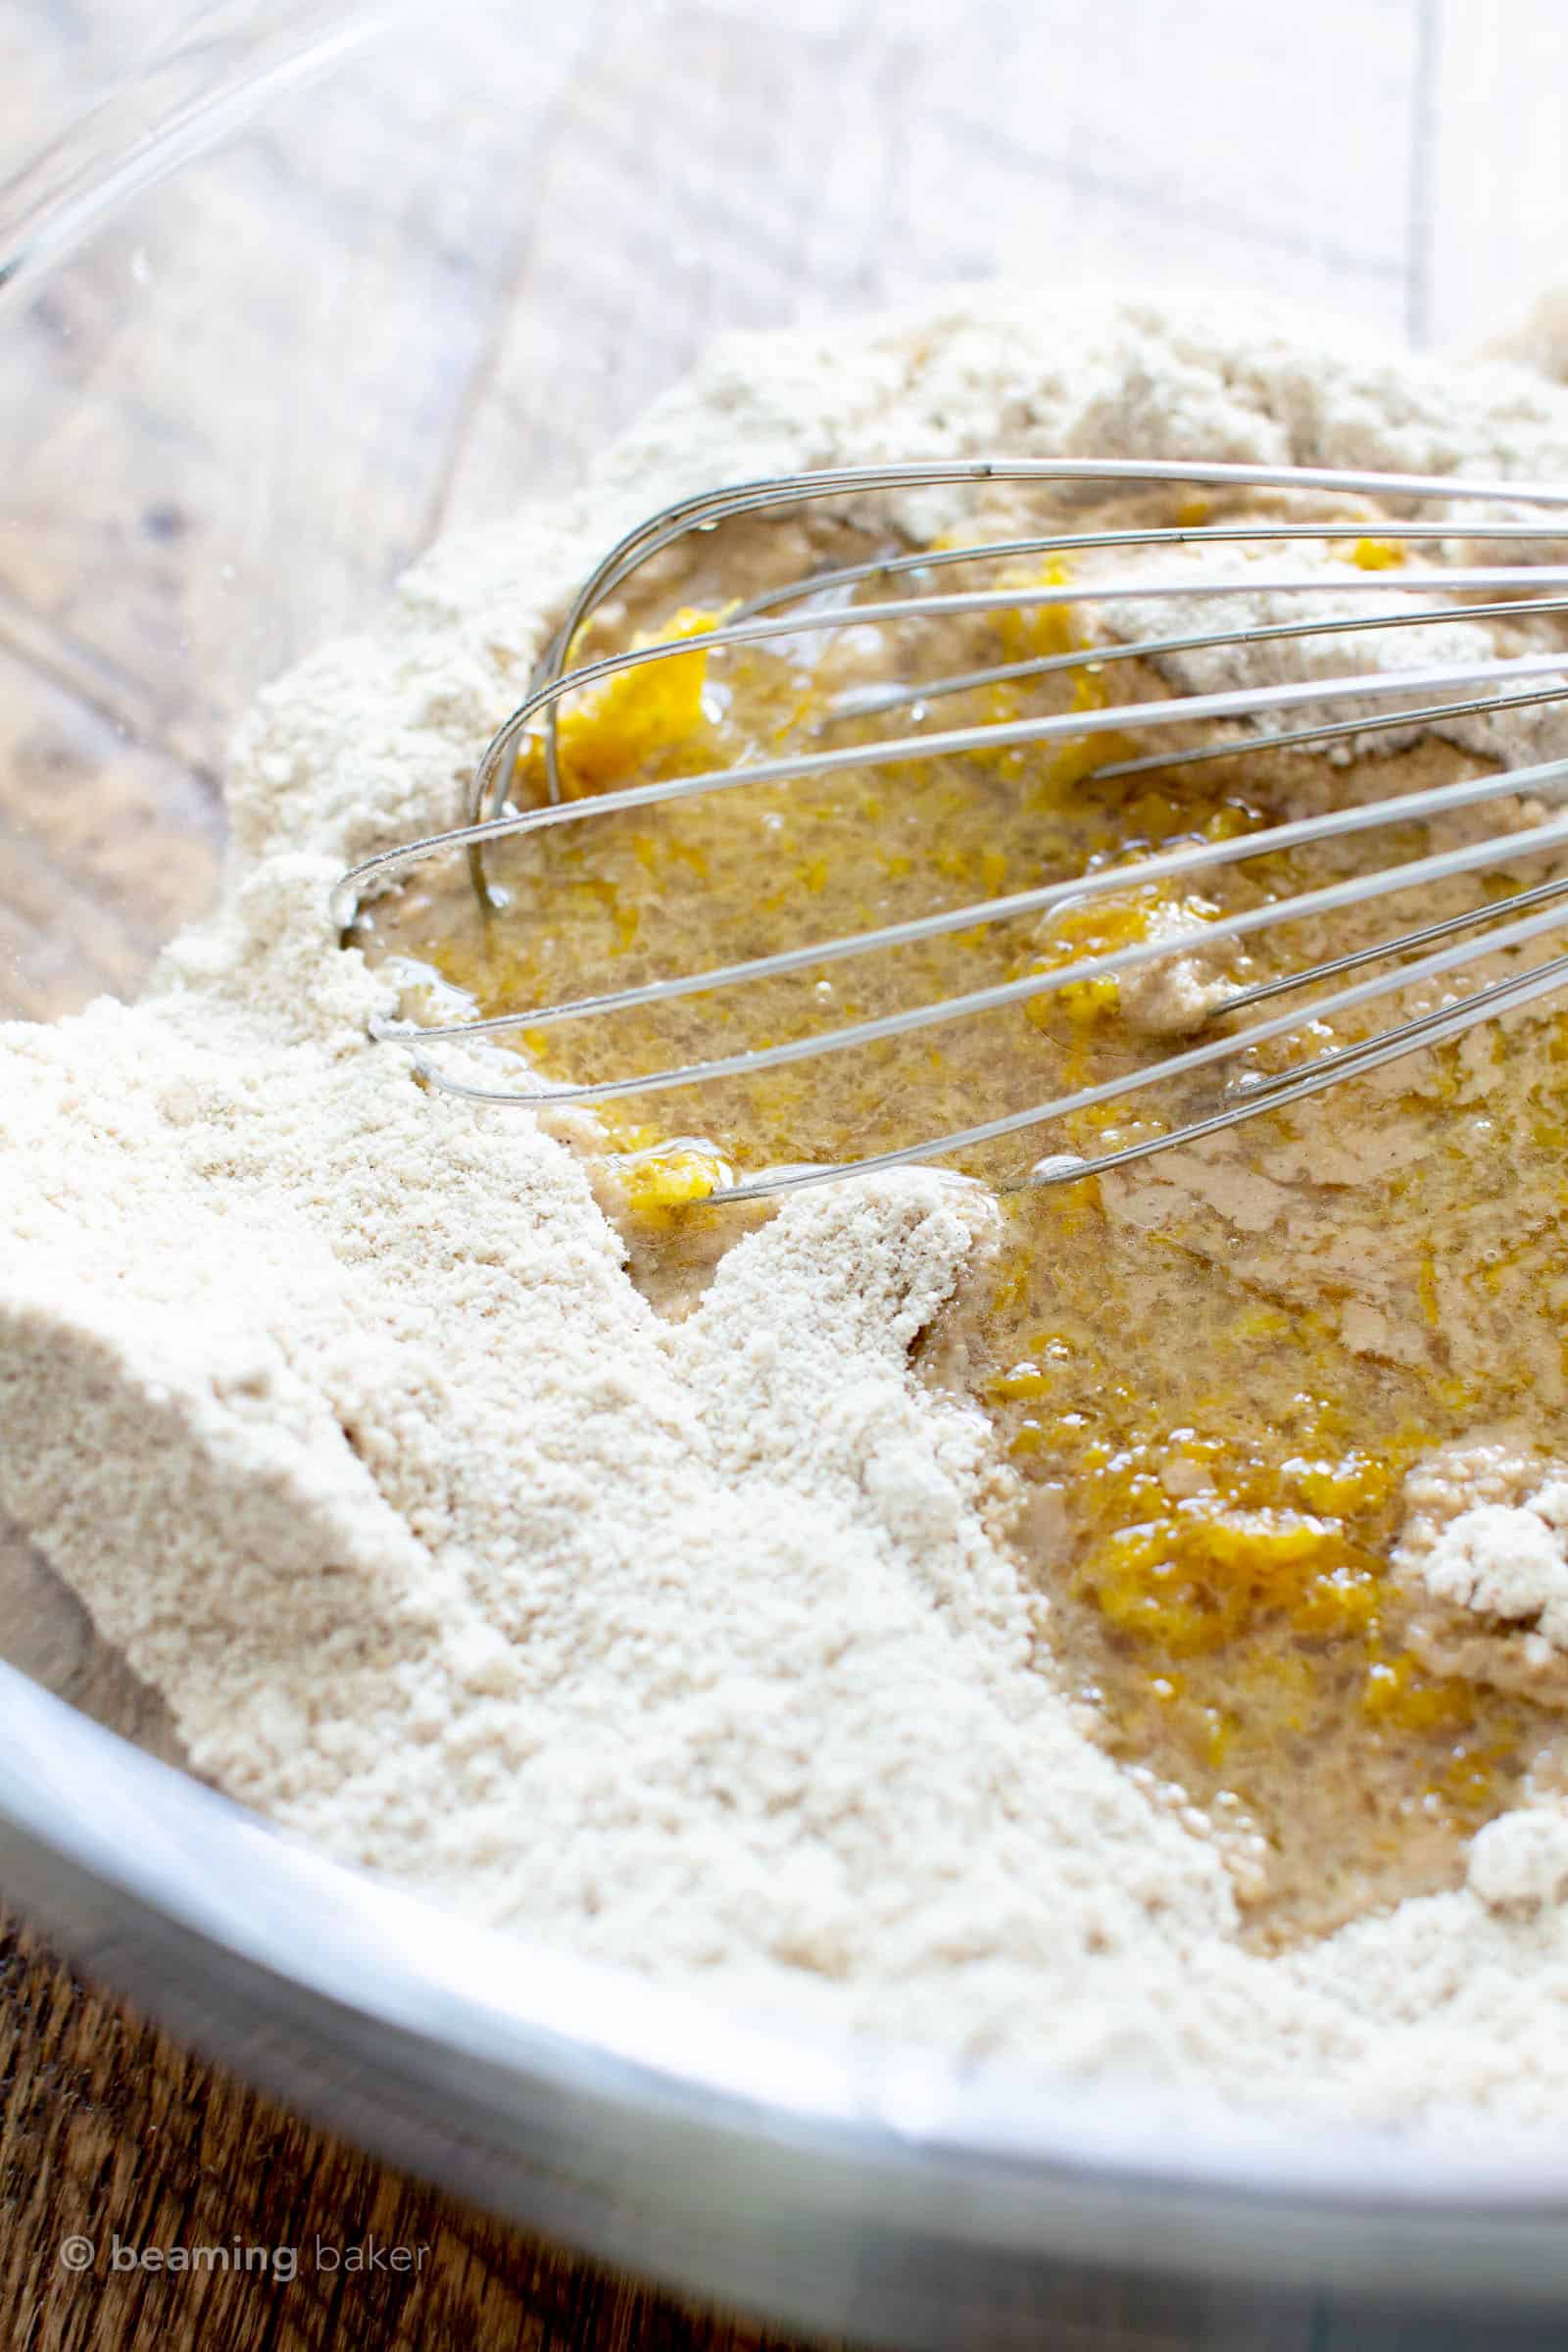 Wet ingredients added to dry ingredients for gluten free vegan muffin recipe